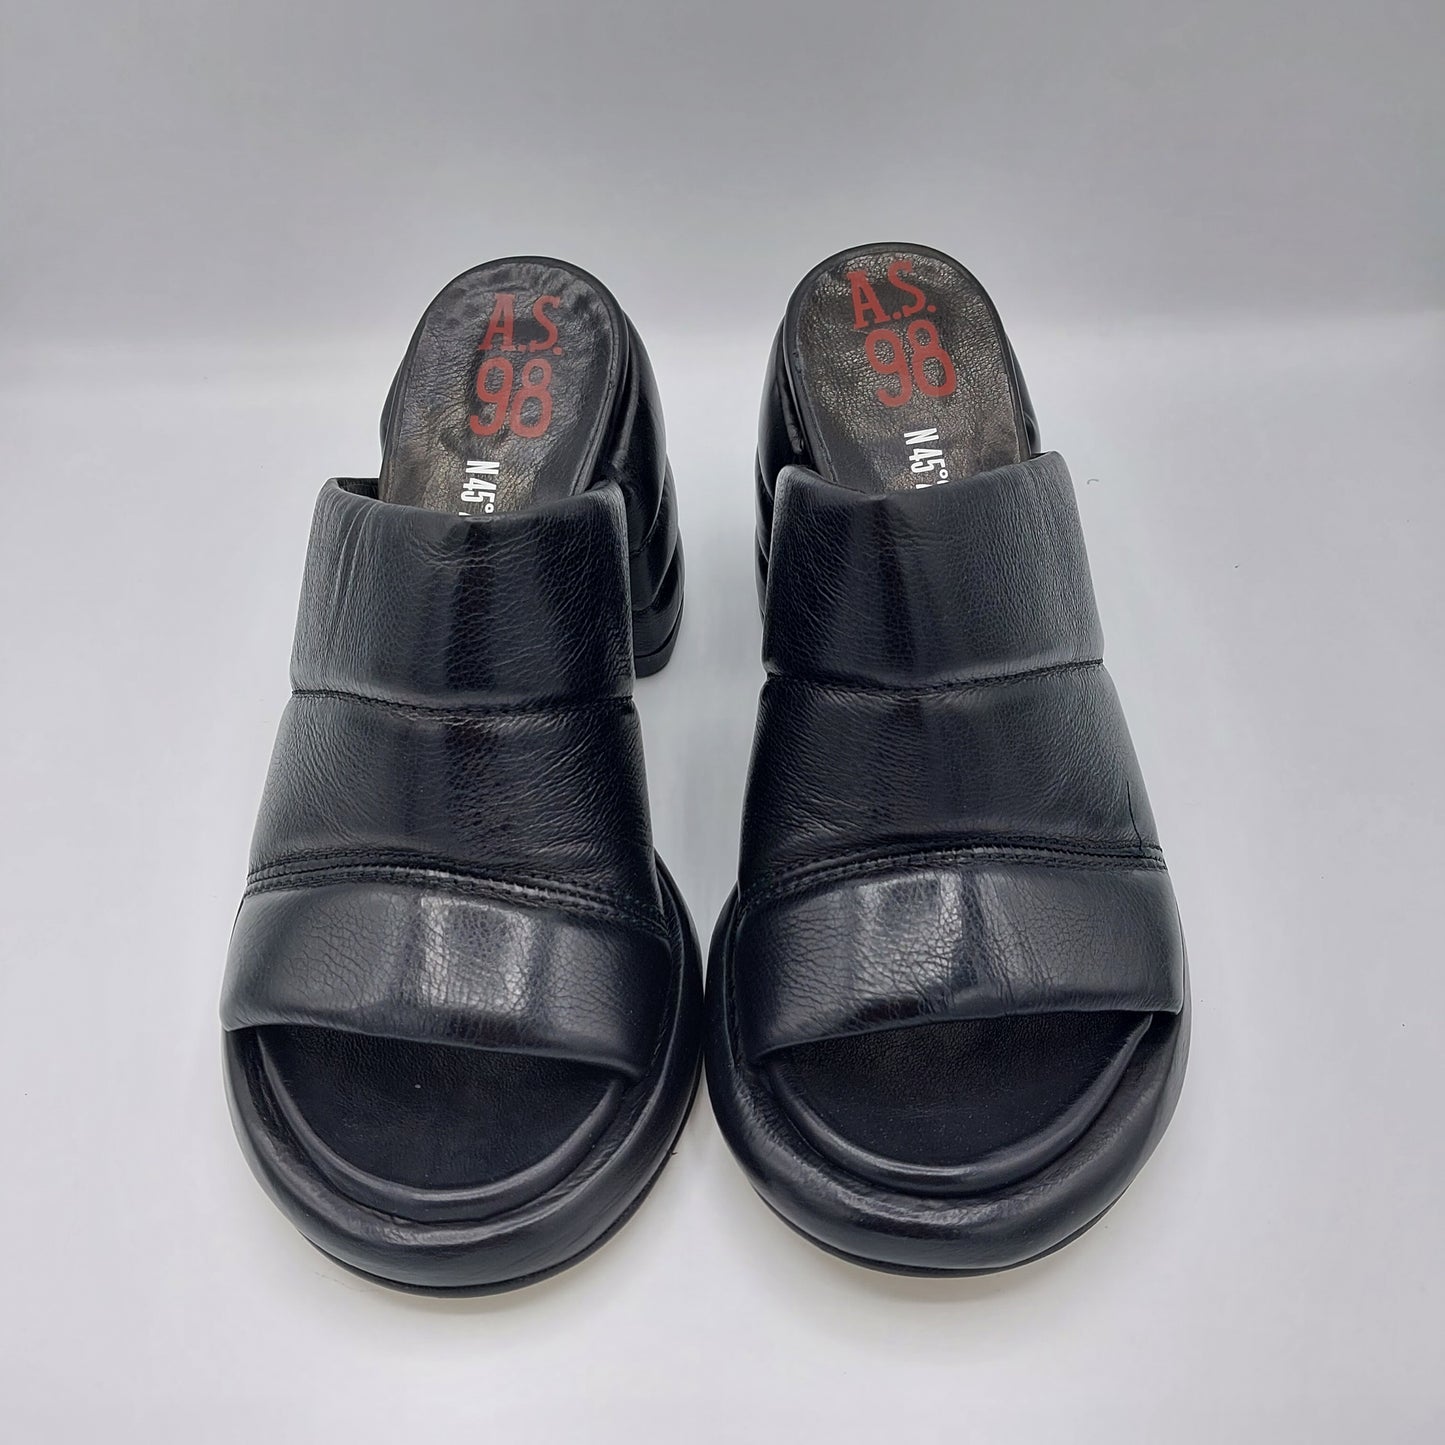 AS98 black slipper with heel